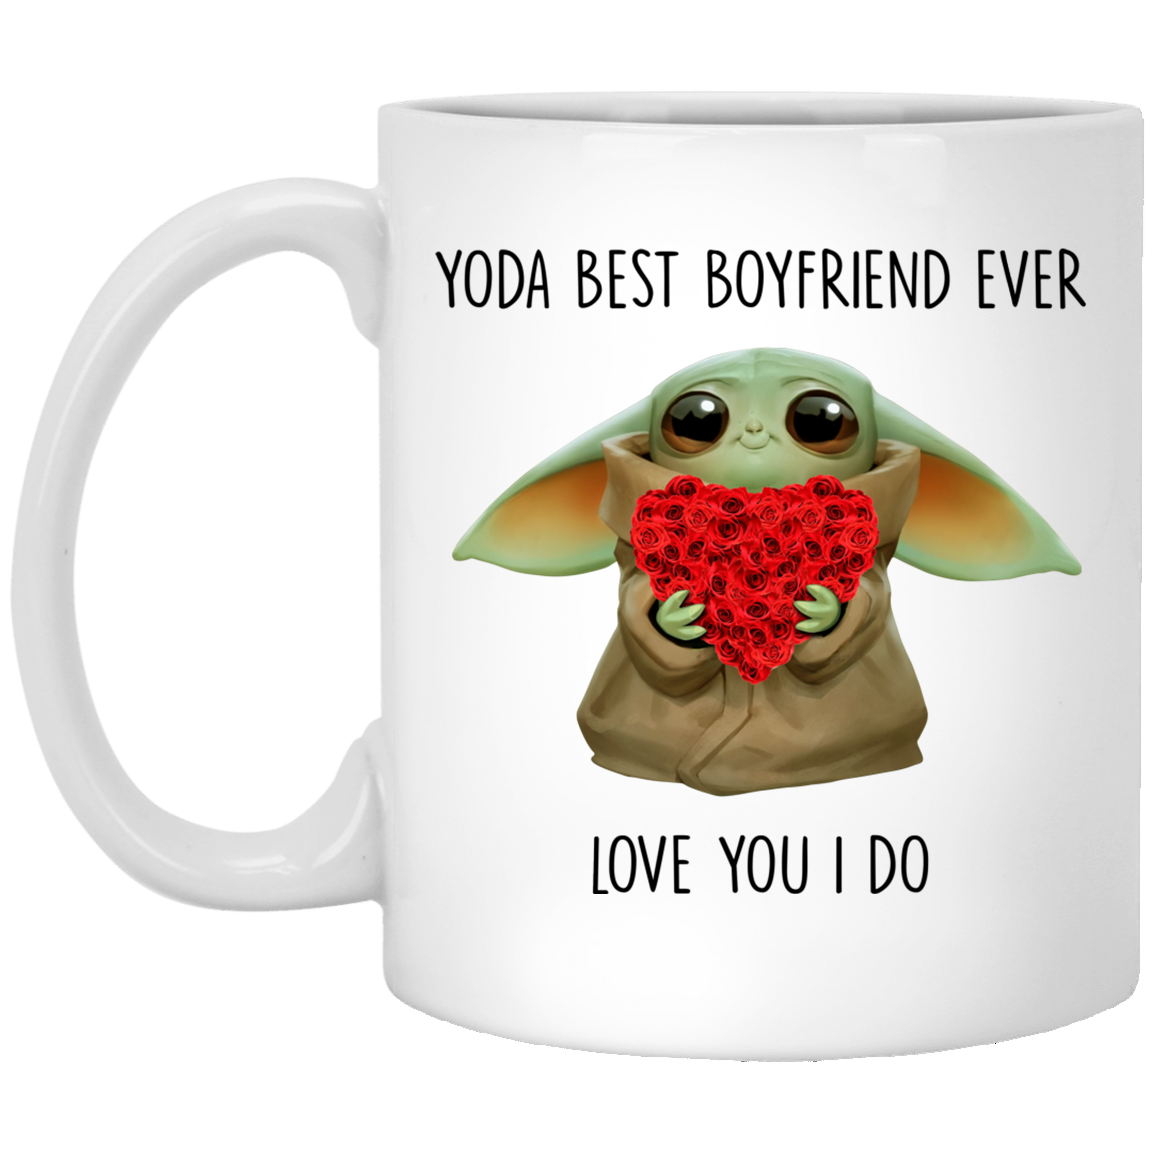 Boyfriend Stainless Steel 20 oz Yoda Best Tumbler Travel Mug 